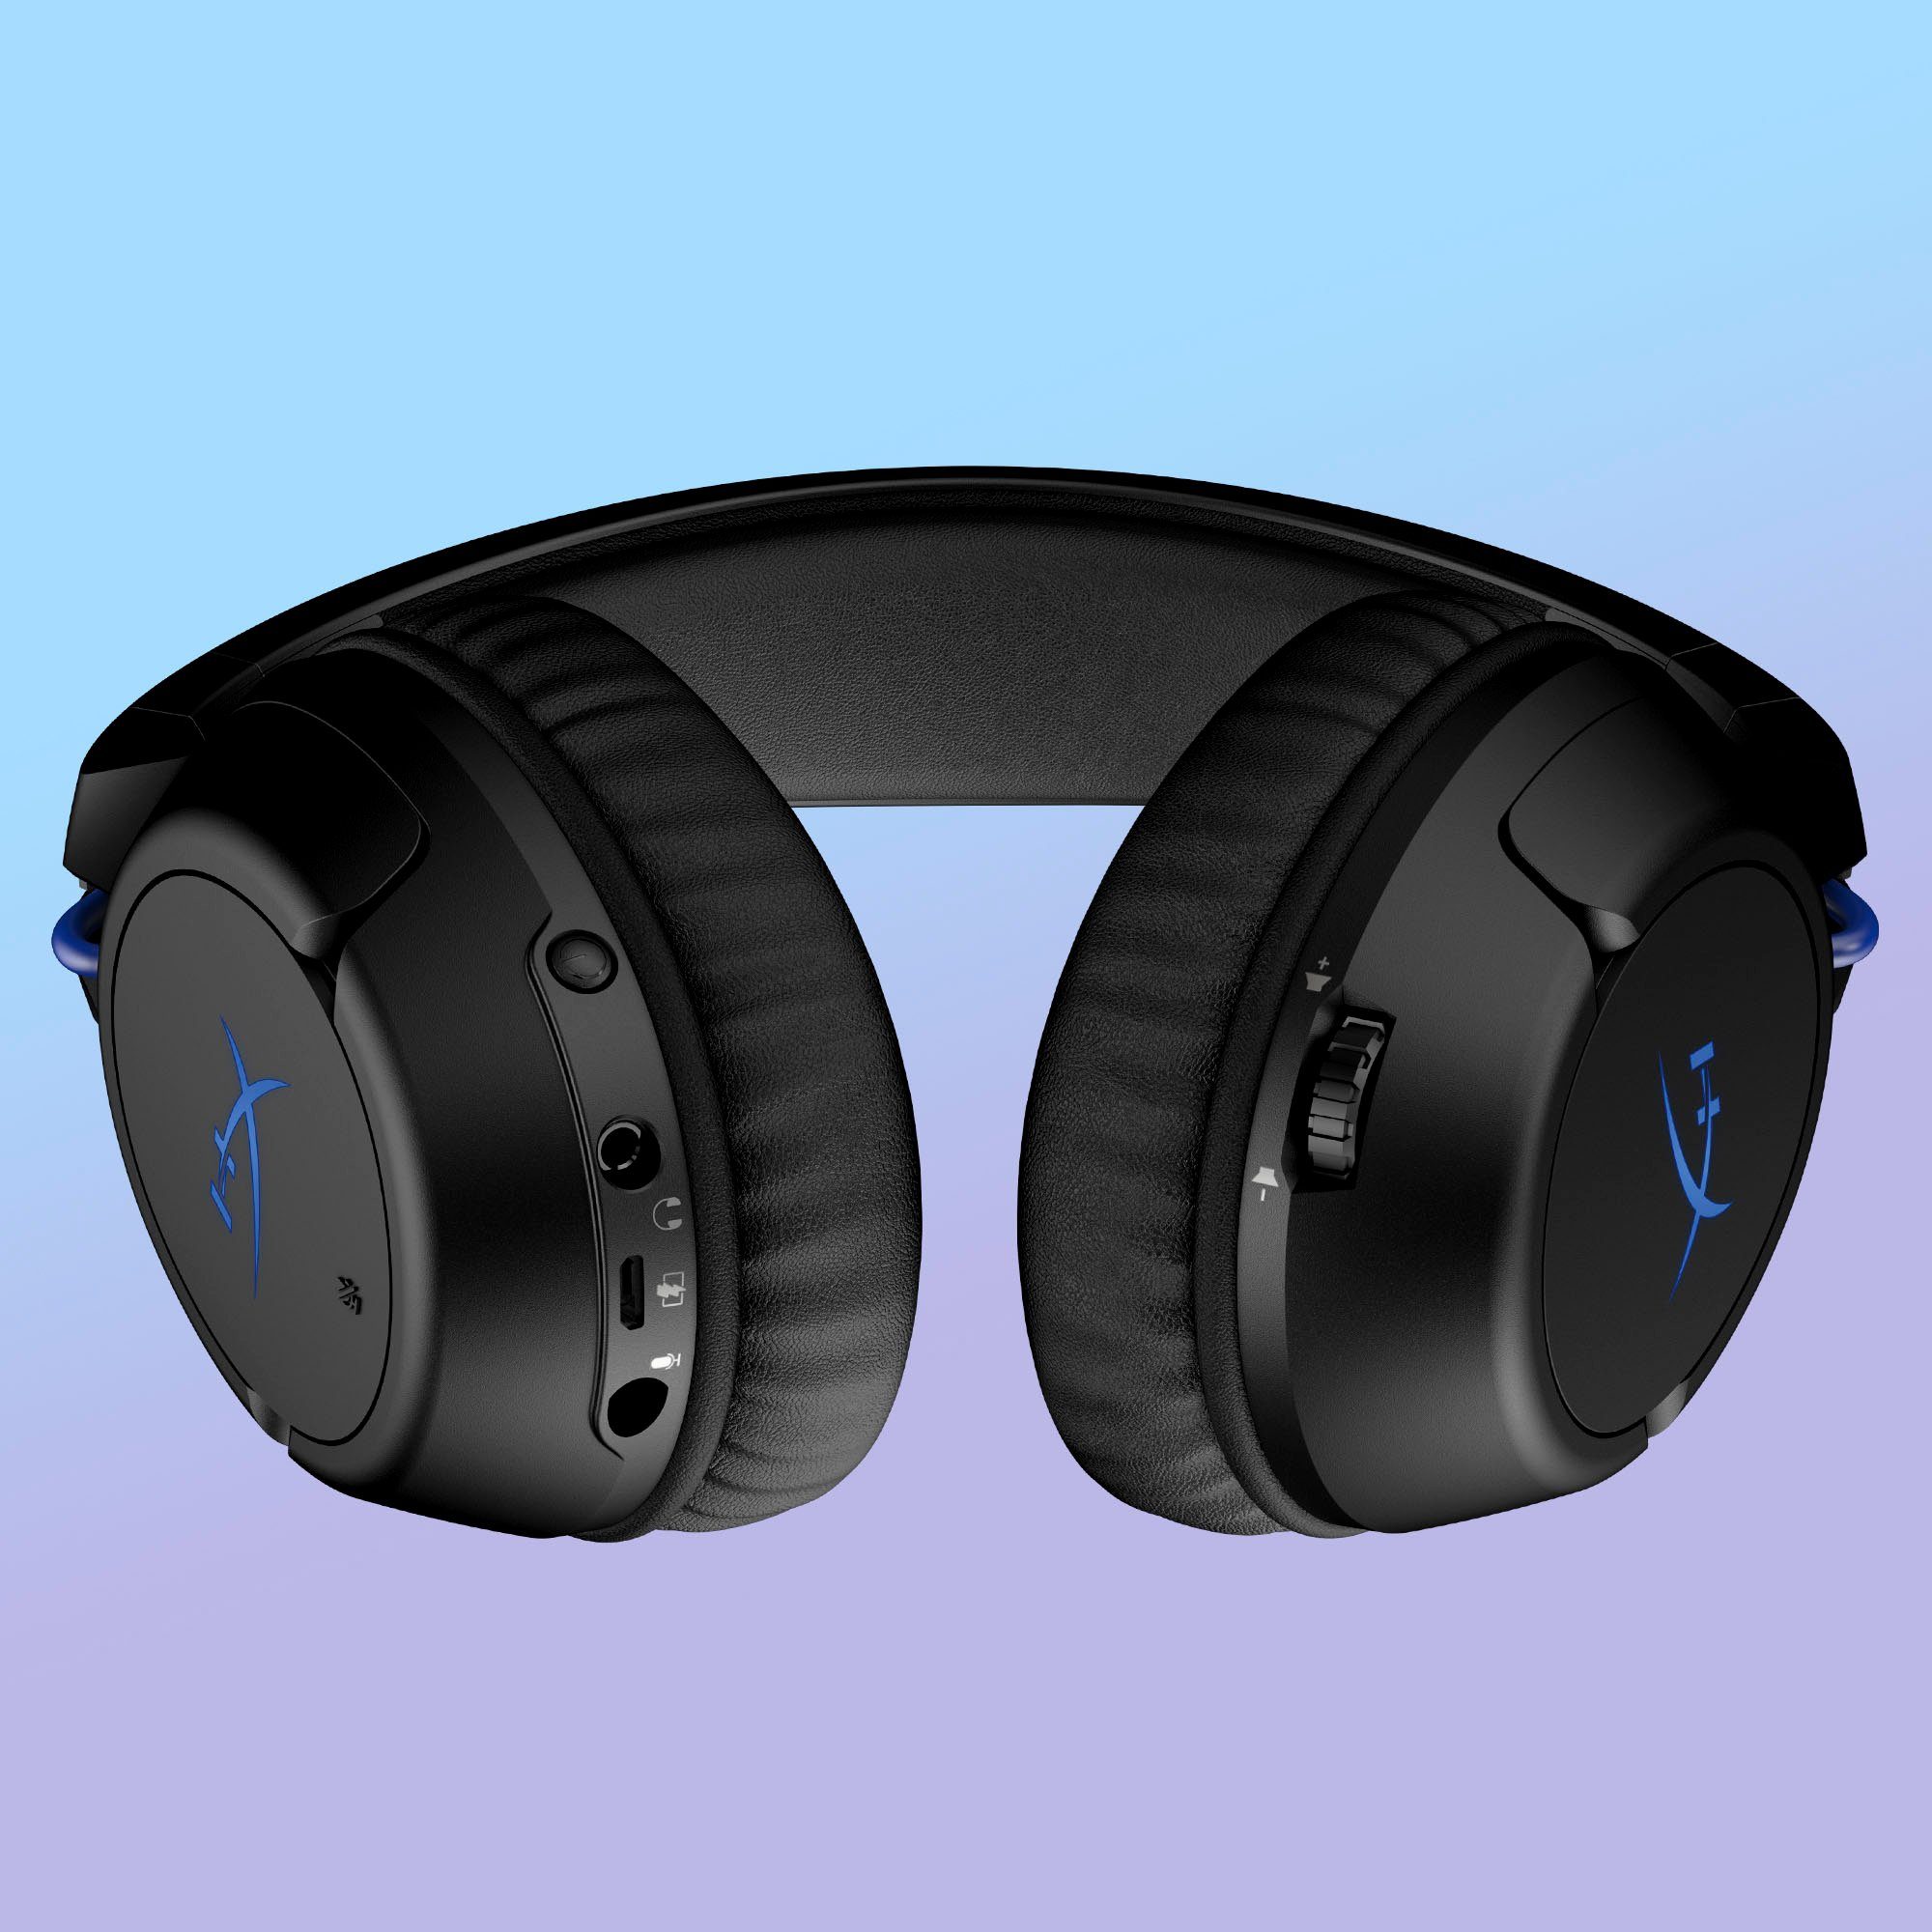 Rauschunterdrückung, Cloud Black/Blue Flight PlayStation (Mikrofon HyperX für Wireless) abnehmbar, Gaming-Headset Wireless